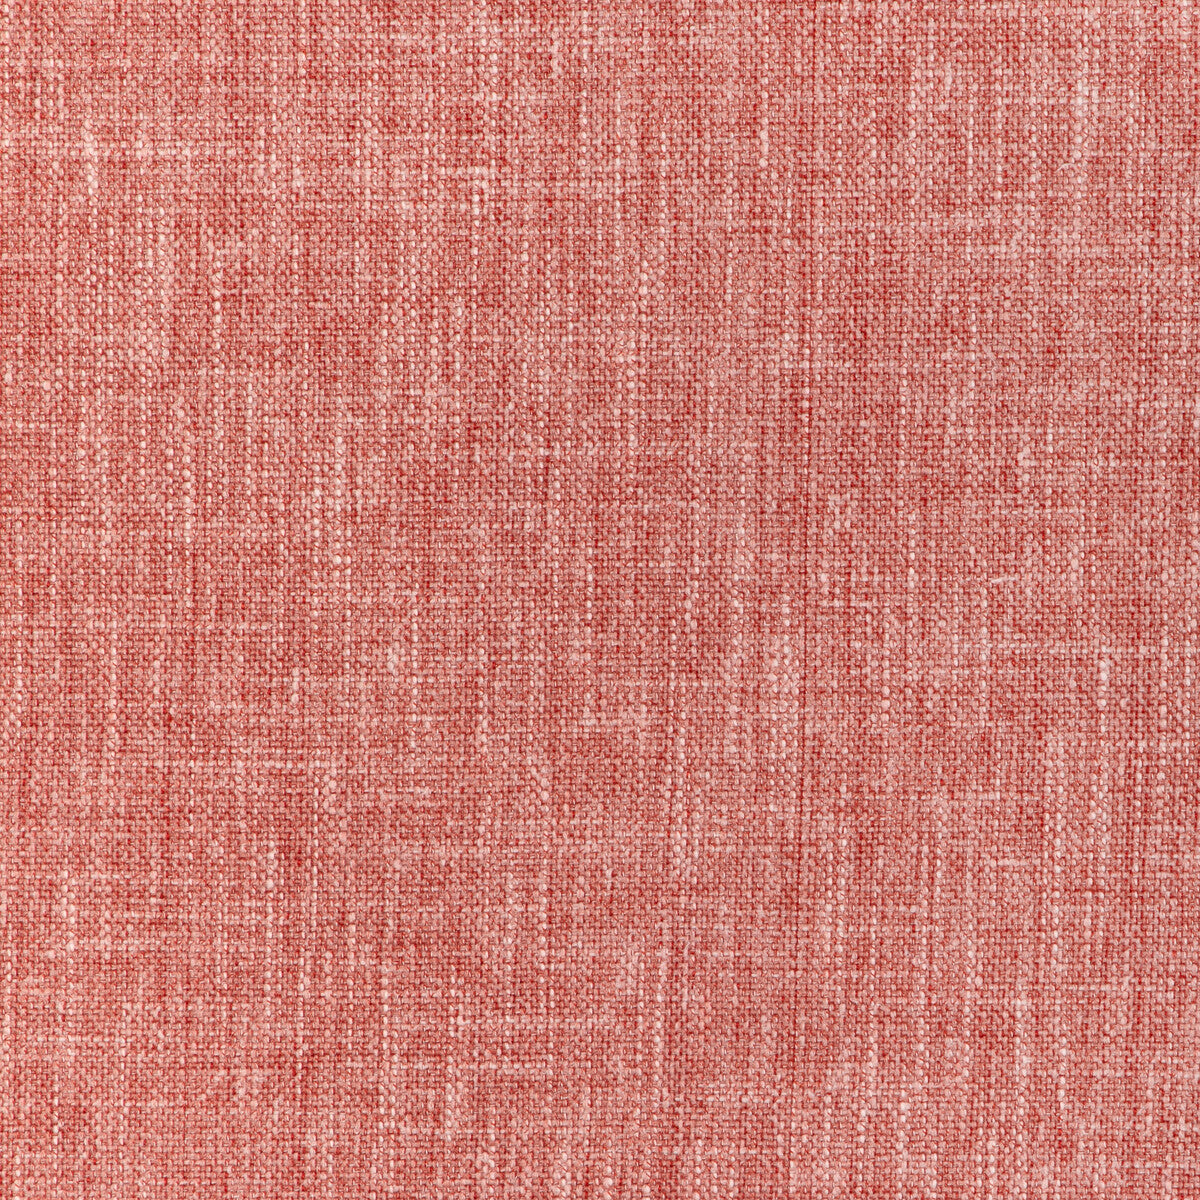 Kravet Smart fabric in 37065-24 color - pattern 37065.24.0 - by Kravet Smart